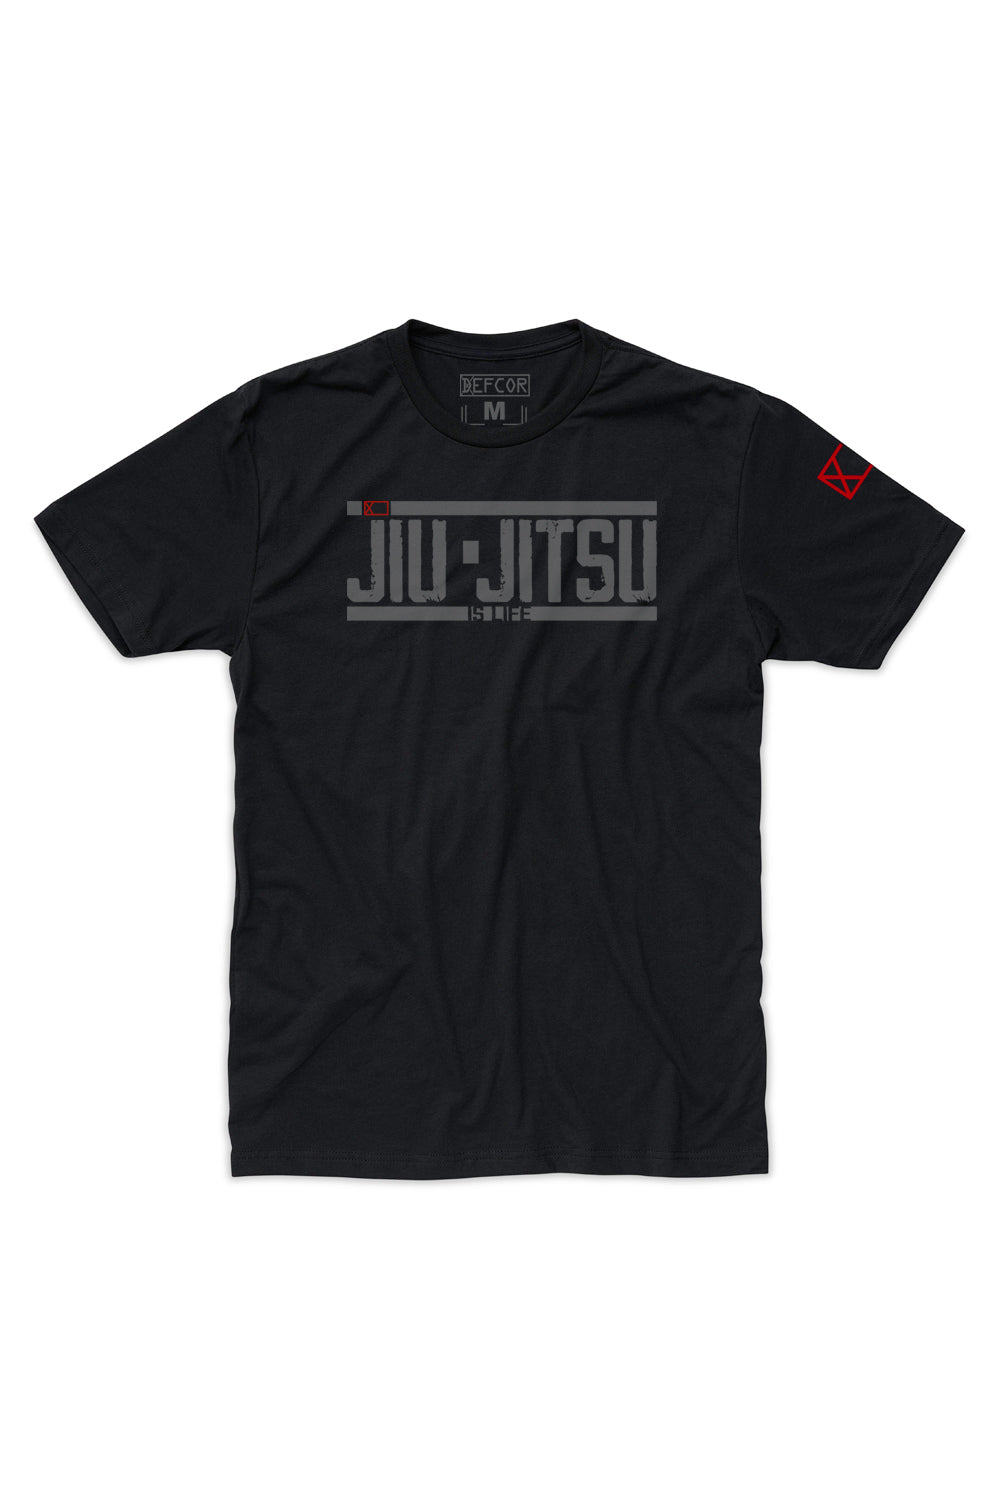 Los Negende Amazon Jungle JIU JITSU IS LIFE - JOCKO T-Shirt – Jockostore.com